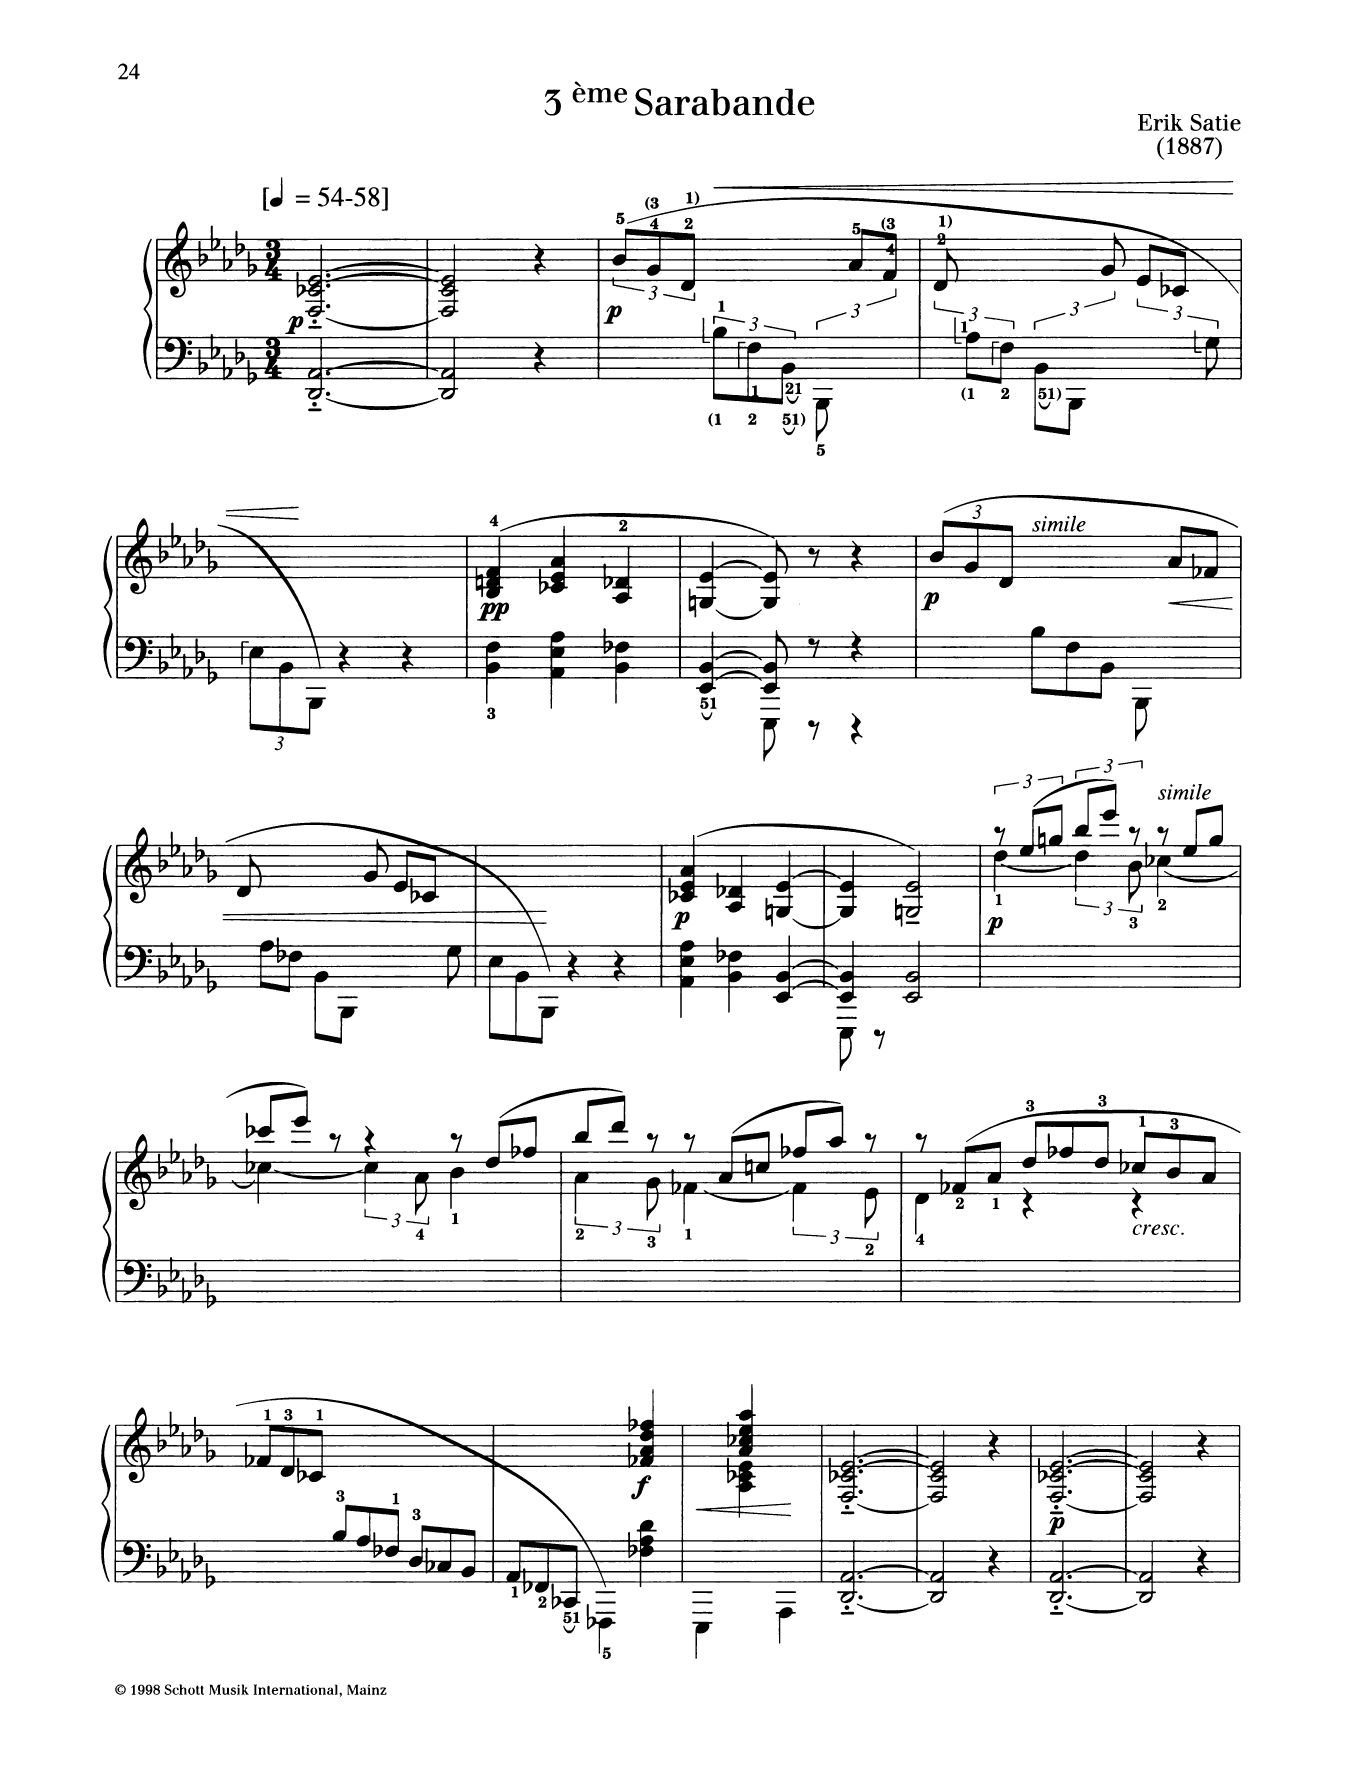 Erik Satie 3eme Sarabande Sheet Music Notes & Chords for Piano Solo - Download or Print PDF